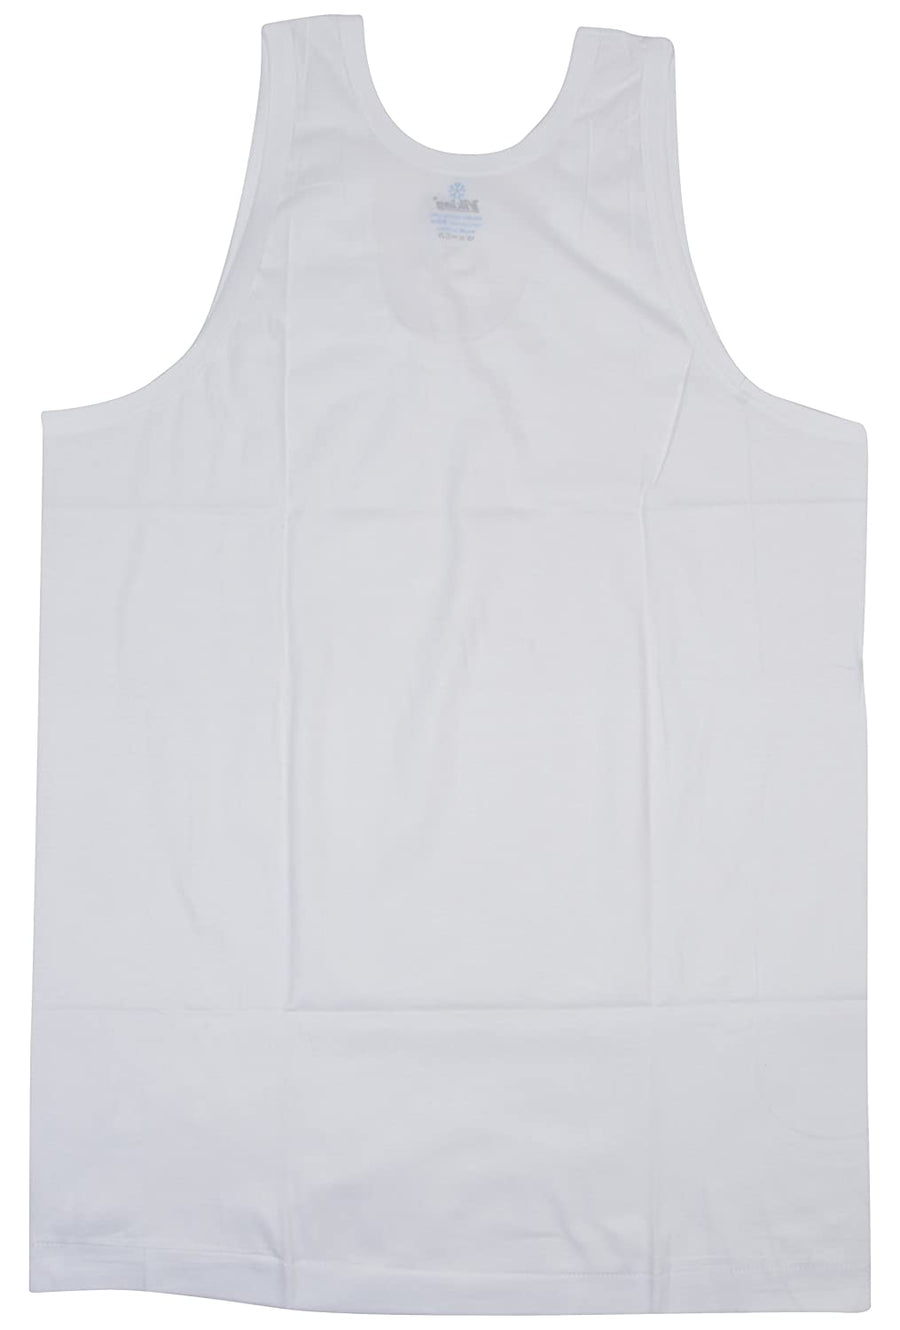 Viking Men's Cotton Vest RN (Pack of 2) - White Colour